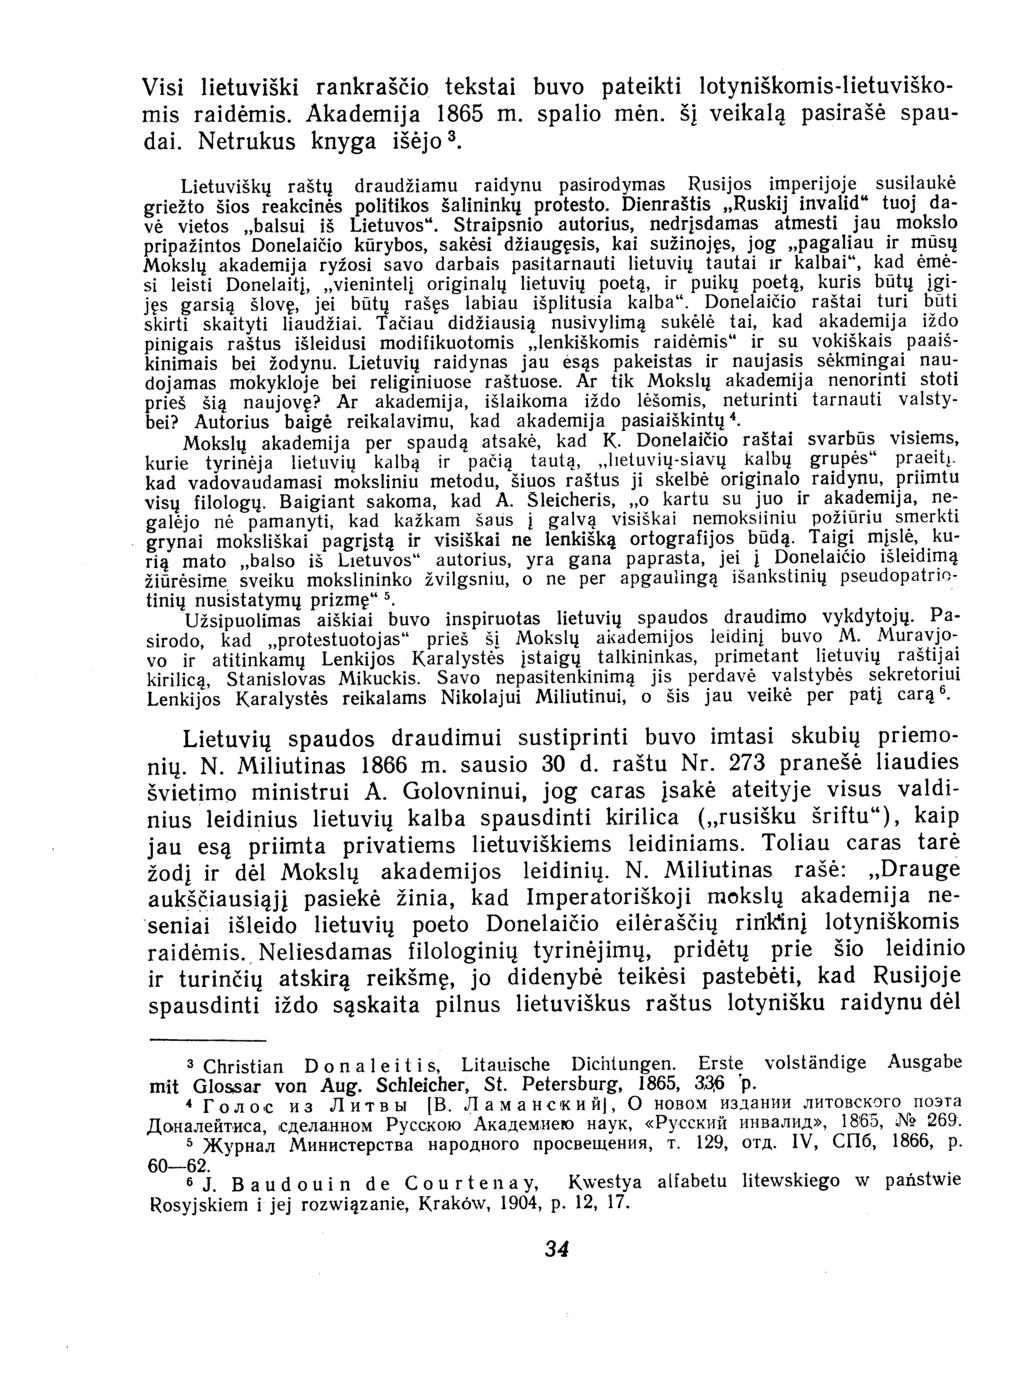 Visi lietuviski rankras io tekstai buvo pateikti lotyni komis-1ietuvi komis raidemis. Akademija 1865 in. spalio men. Si veikala pasira e spaudai. Netrukus knyga i ejo3. Lietuviskt!